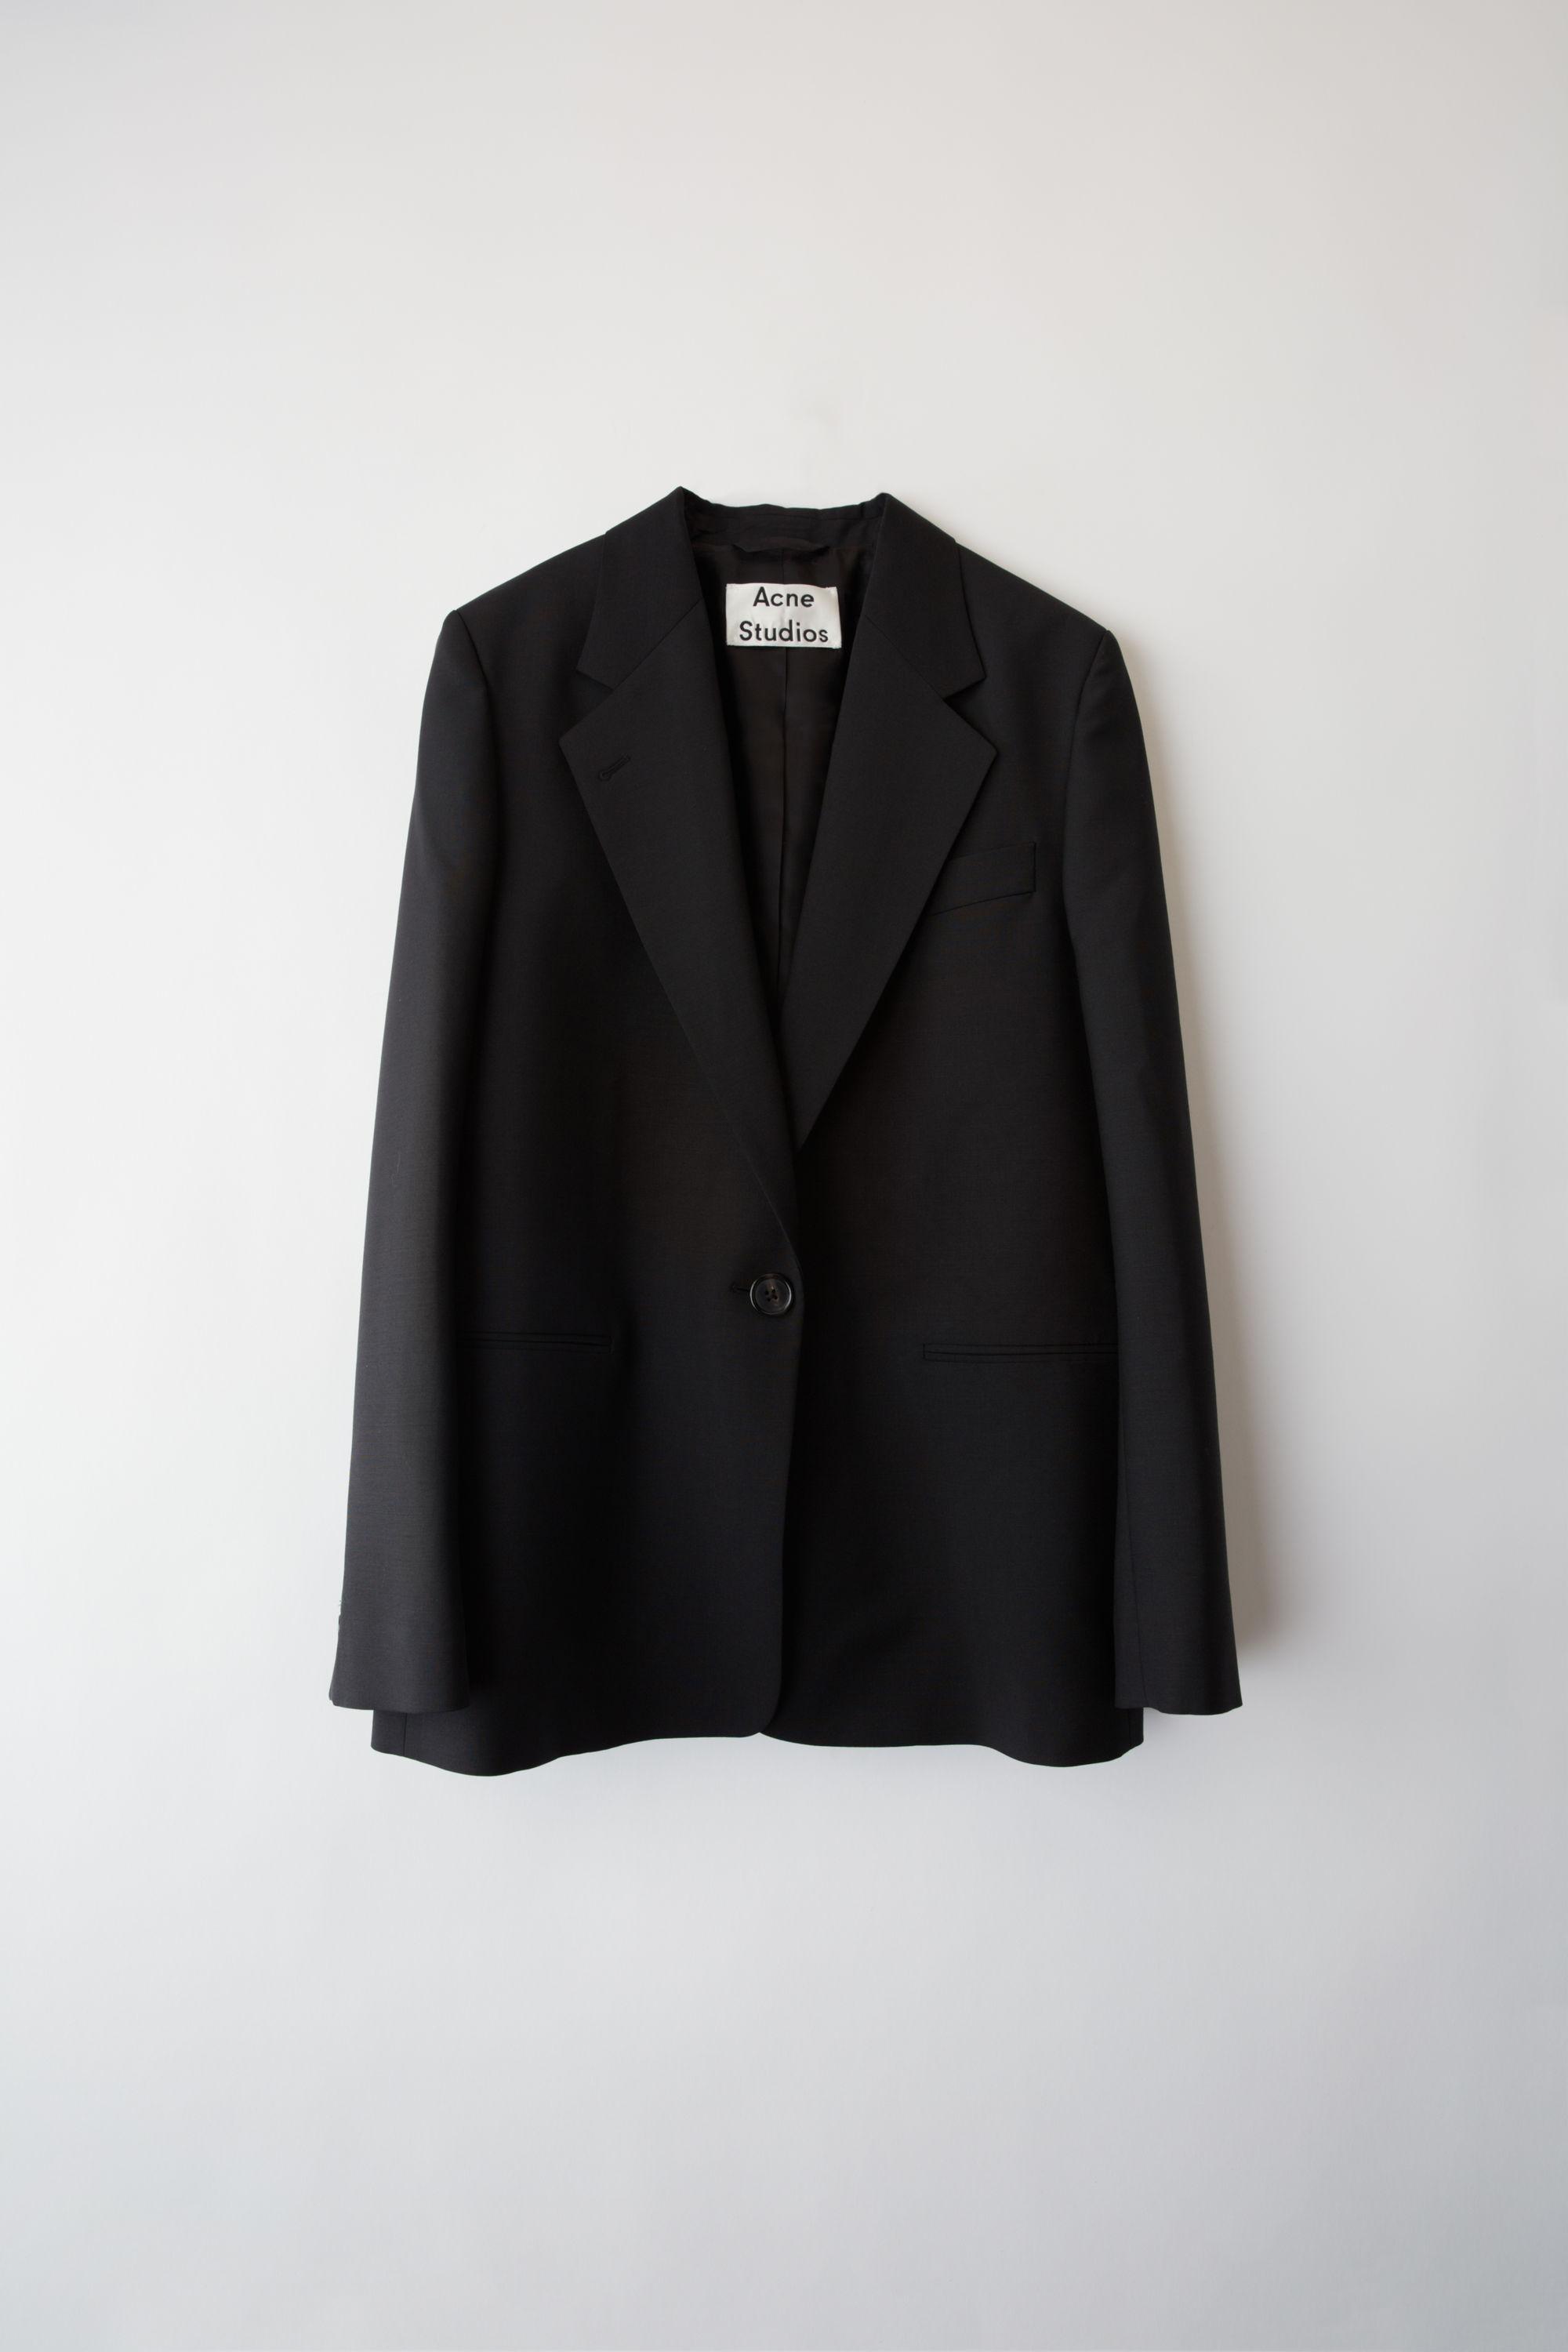 Acne Studios Fn-wn-suit000008 Black Single Breasted Jacket in Black - Lyst